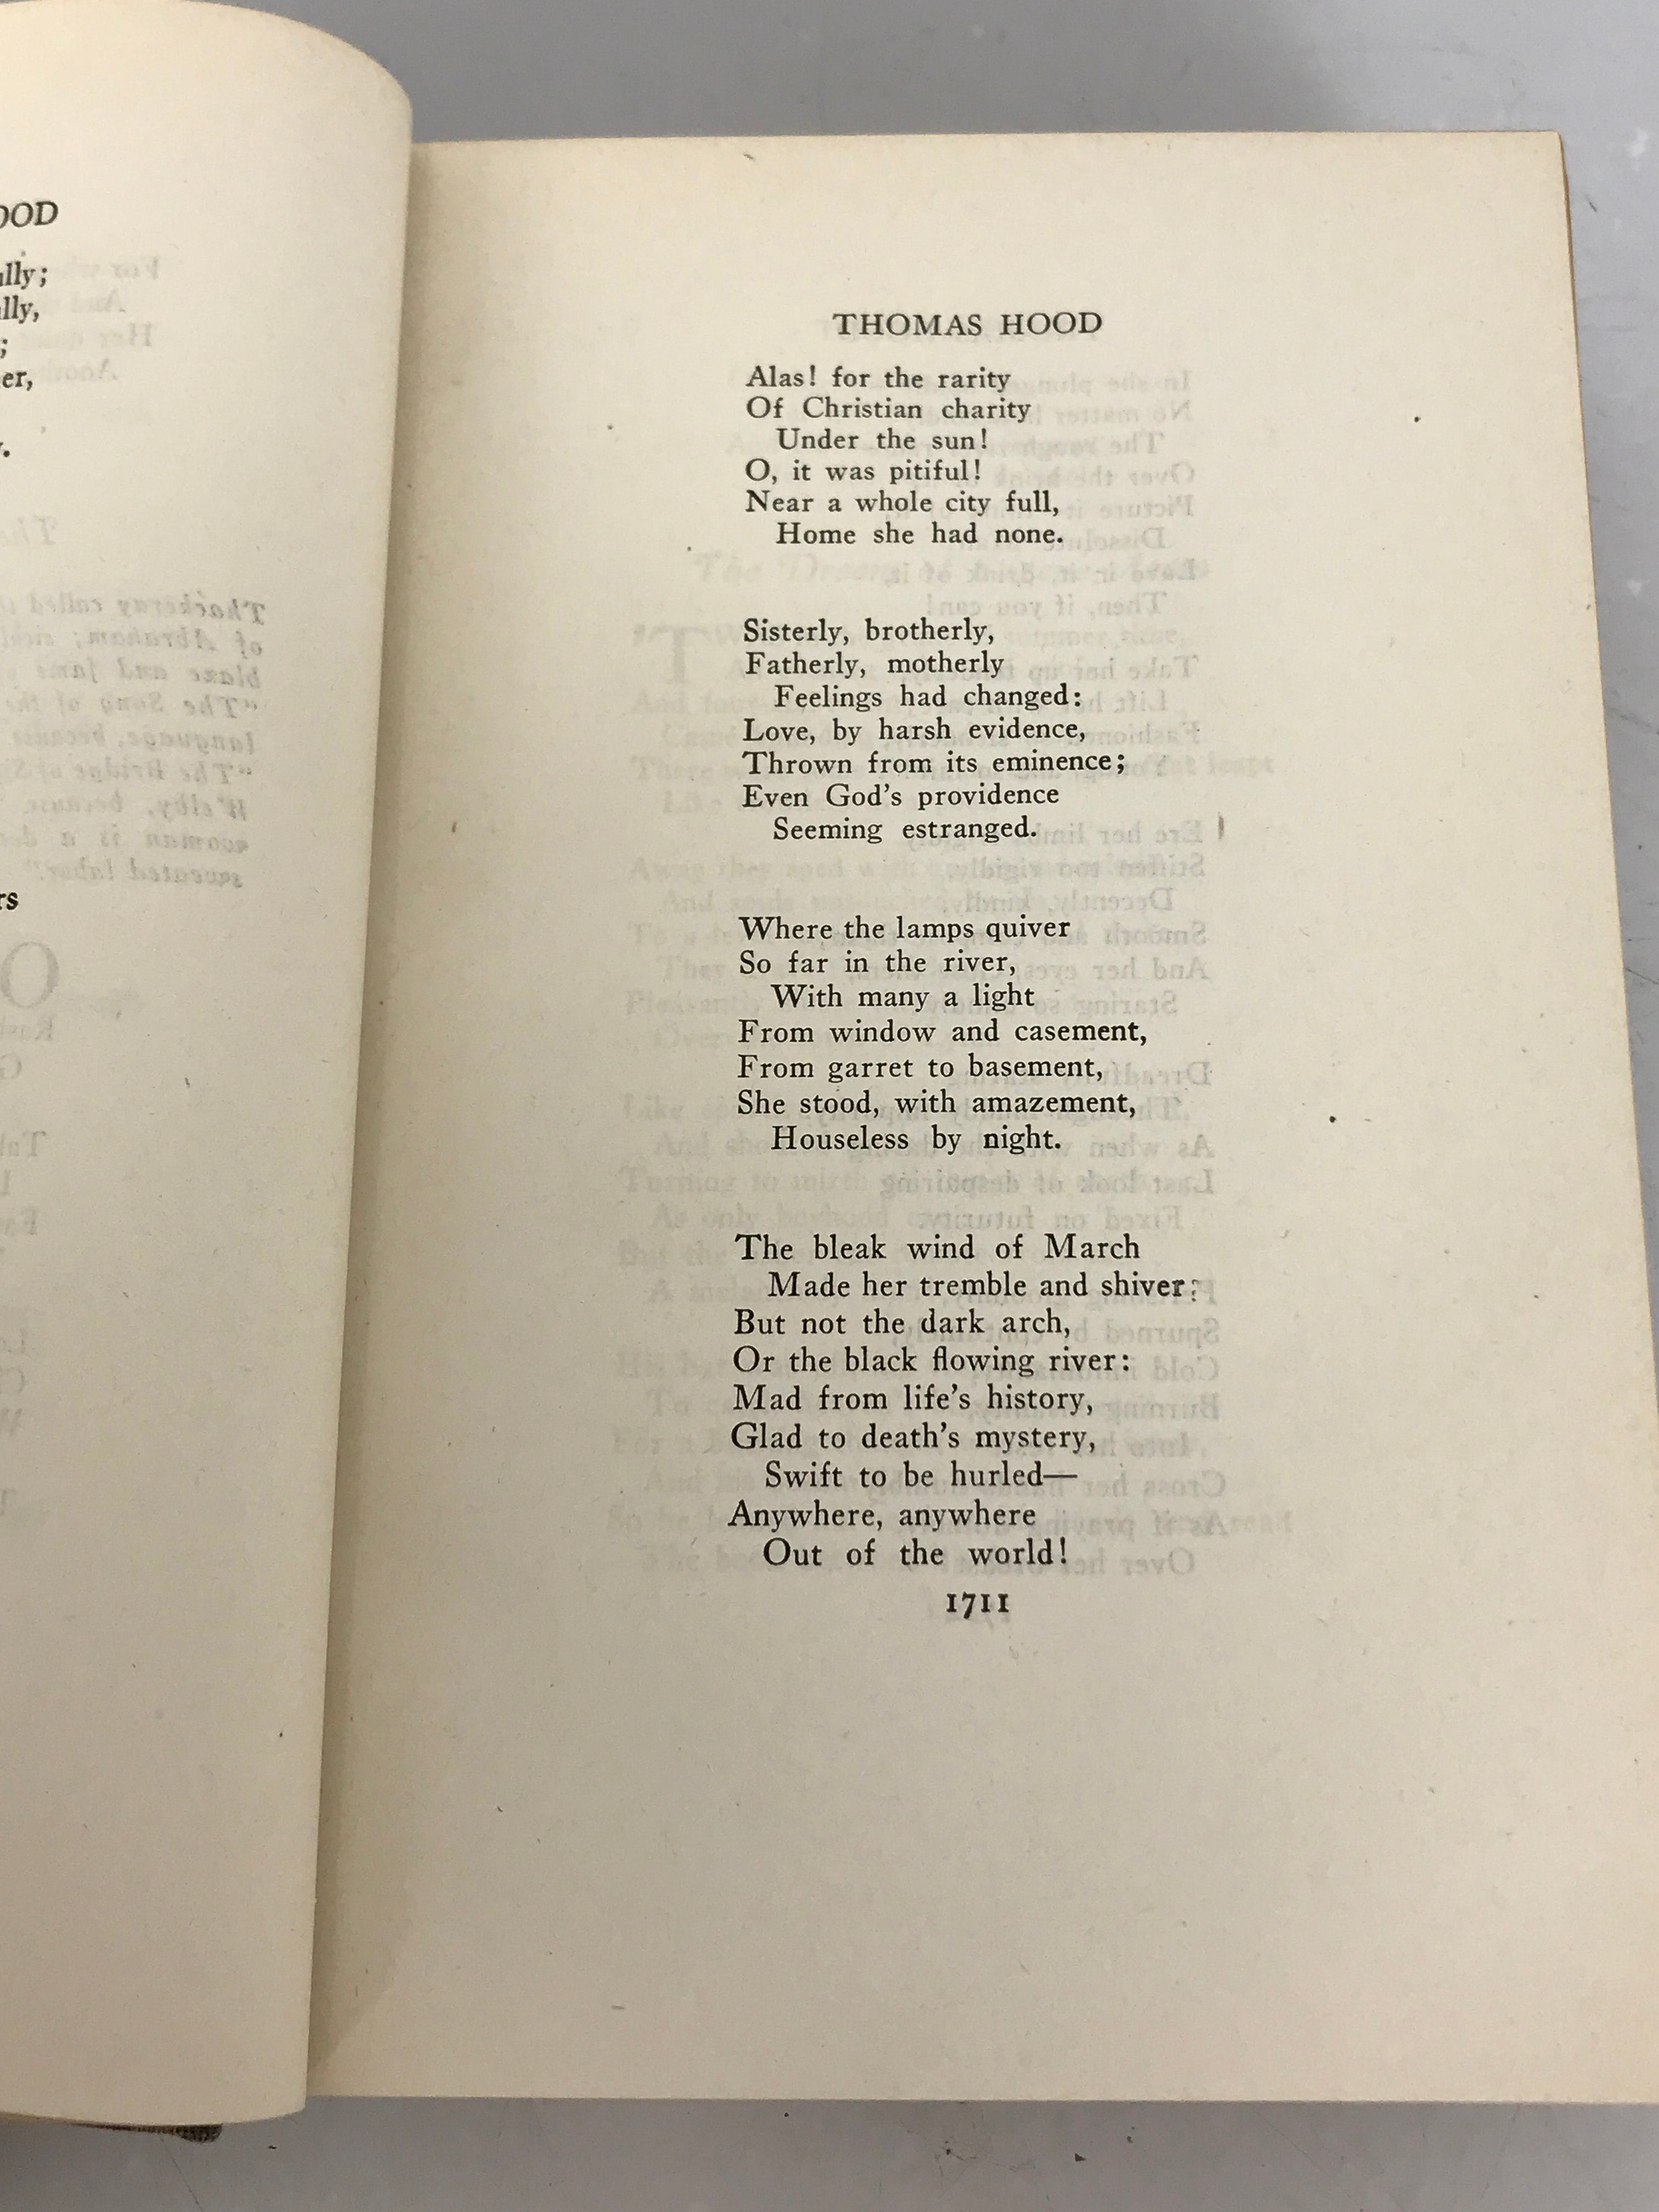 The Book of Poetry Vol II Edwin Markham 1928 HC DJ